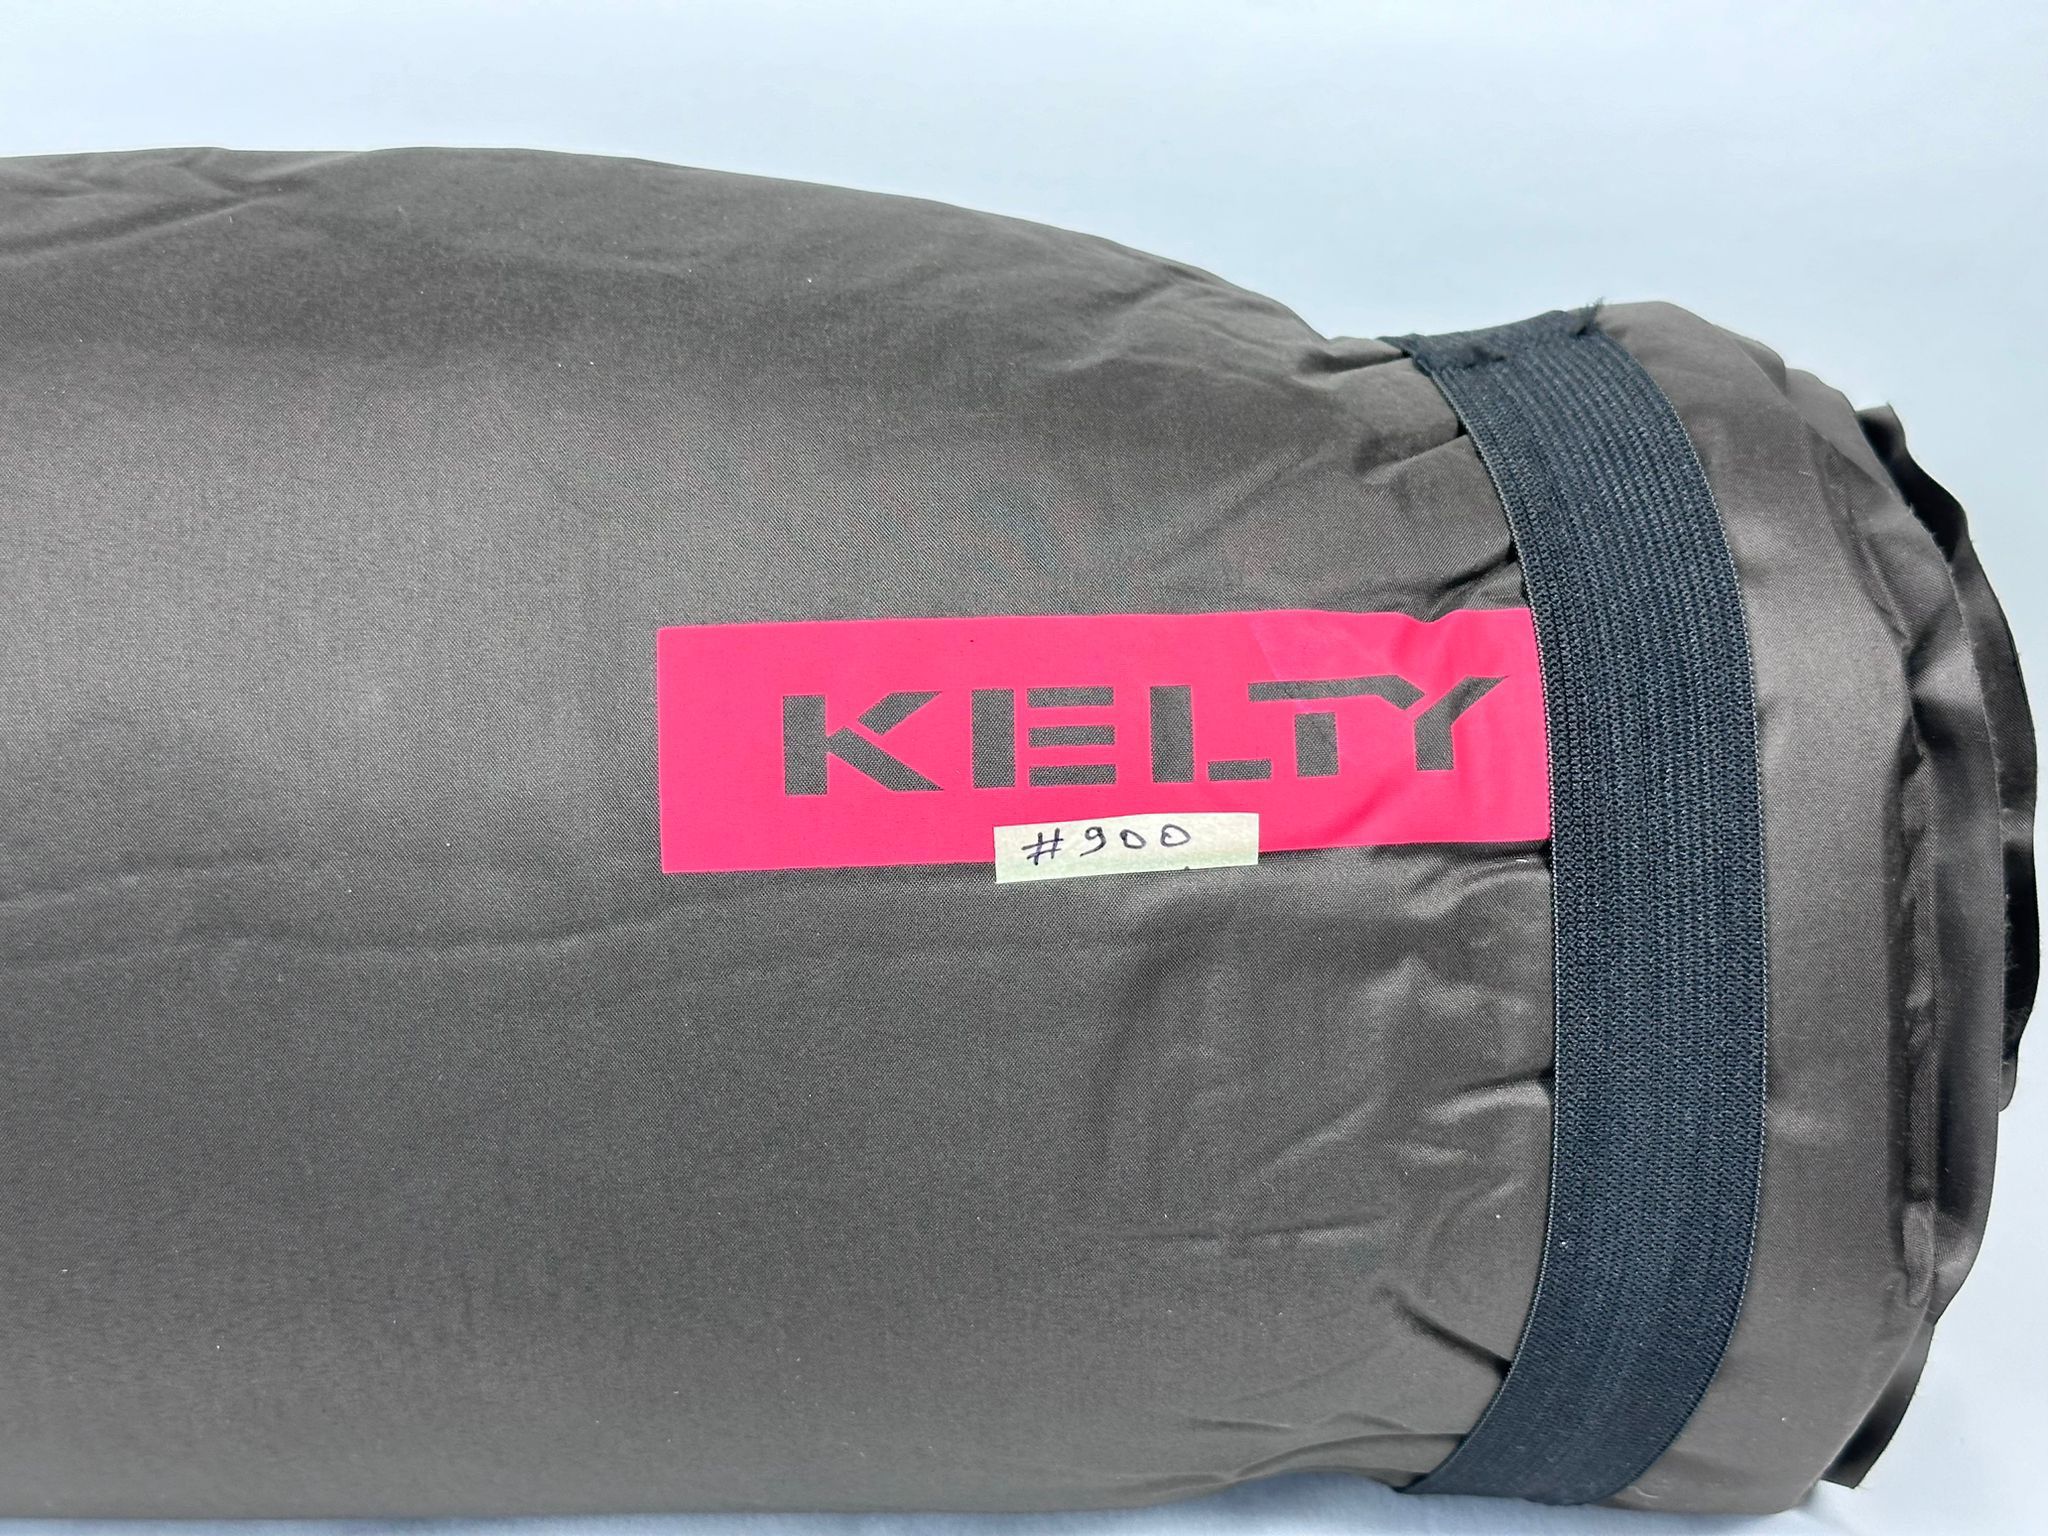 #900 Kelty Inflatable Air Mattress 72" x 21" Camping Sleeping Pad